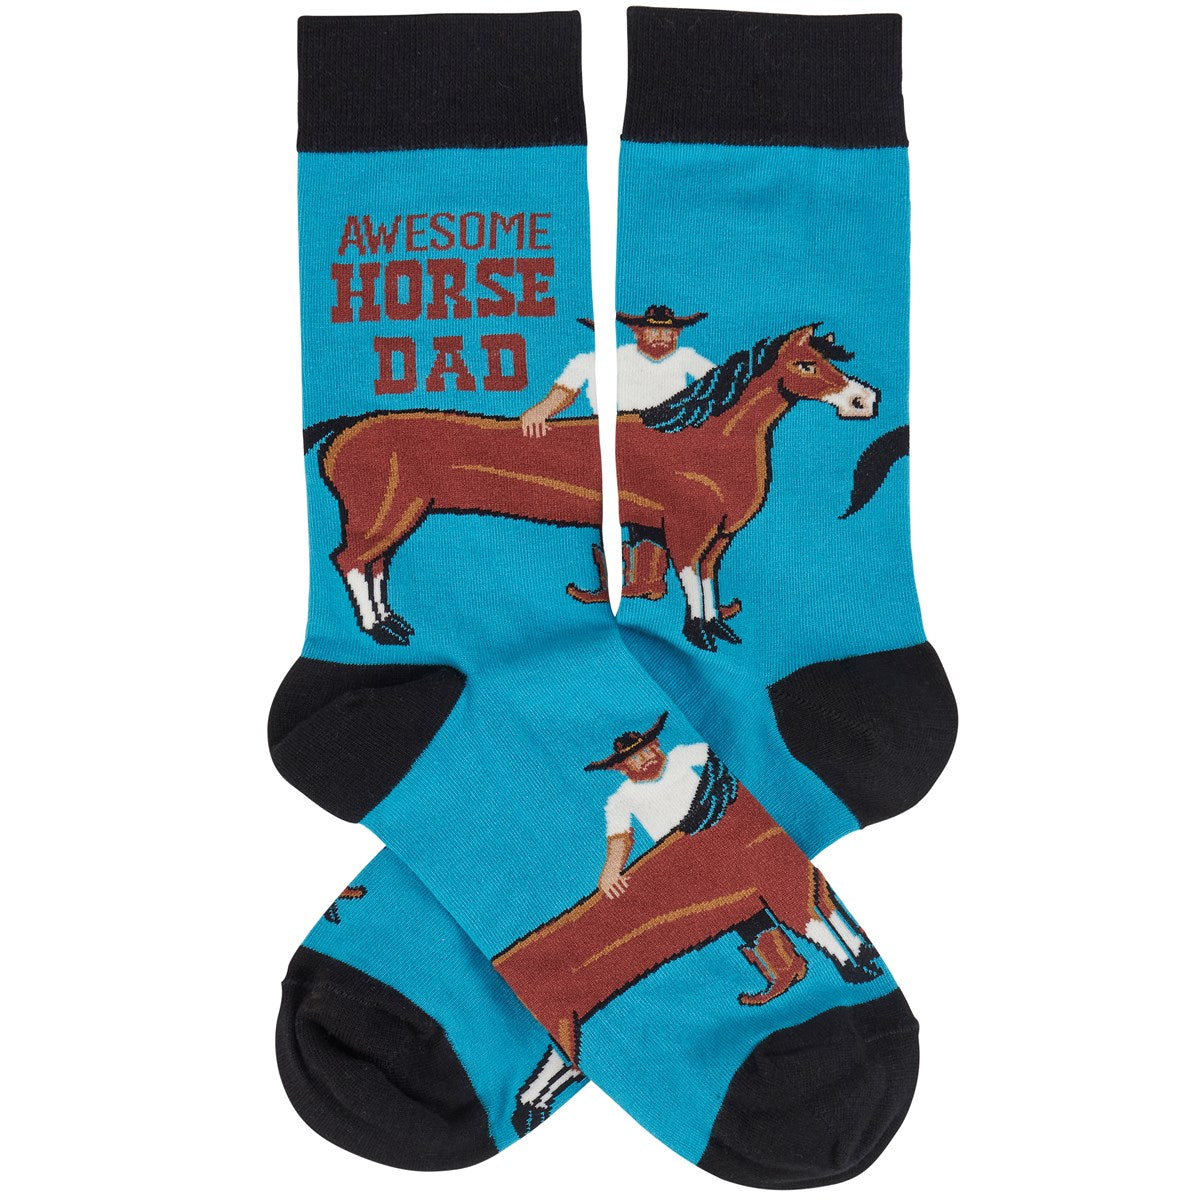 Awesome Horse Dad Fun Novelty Socks